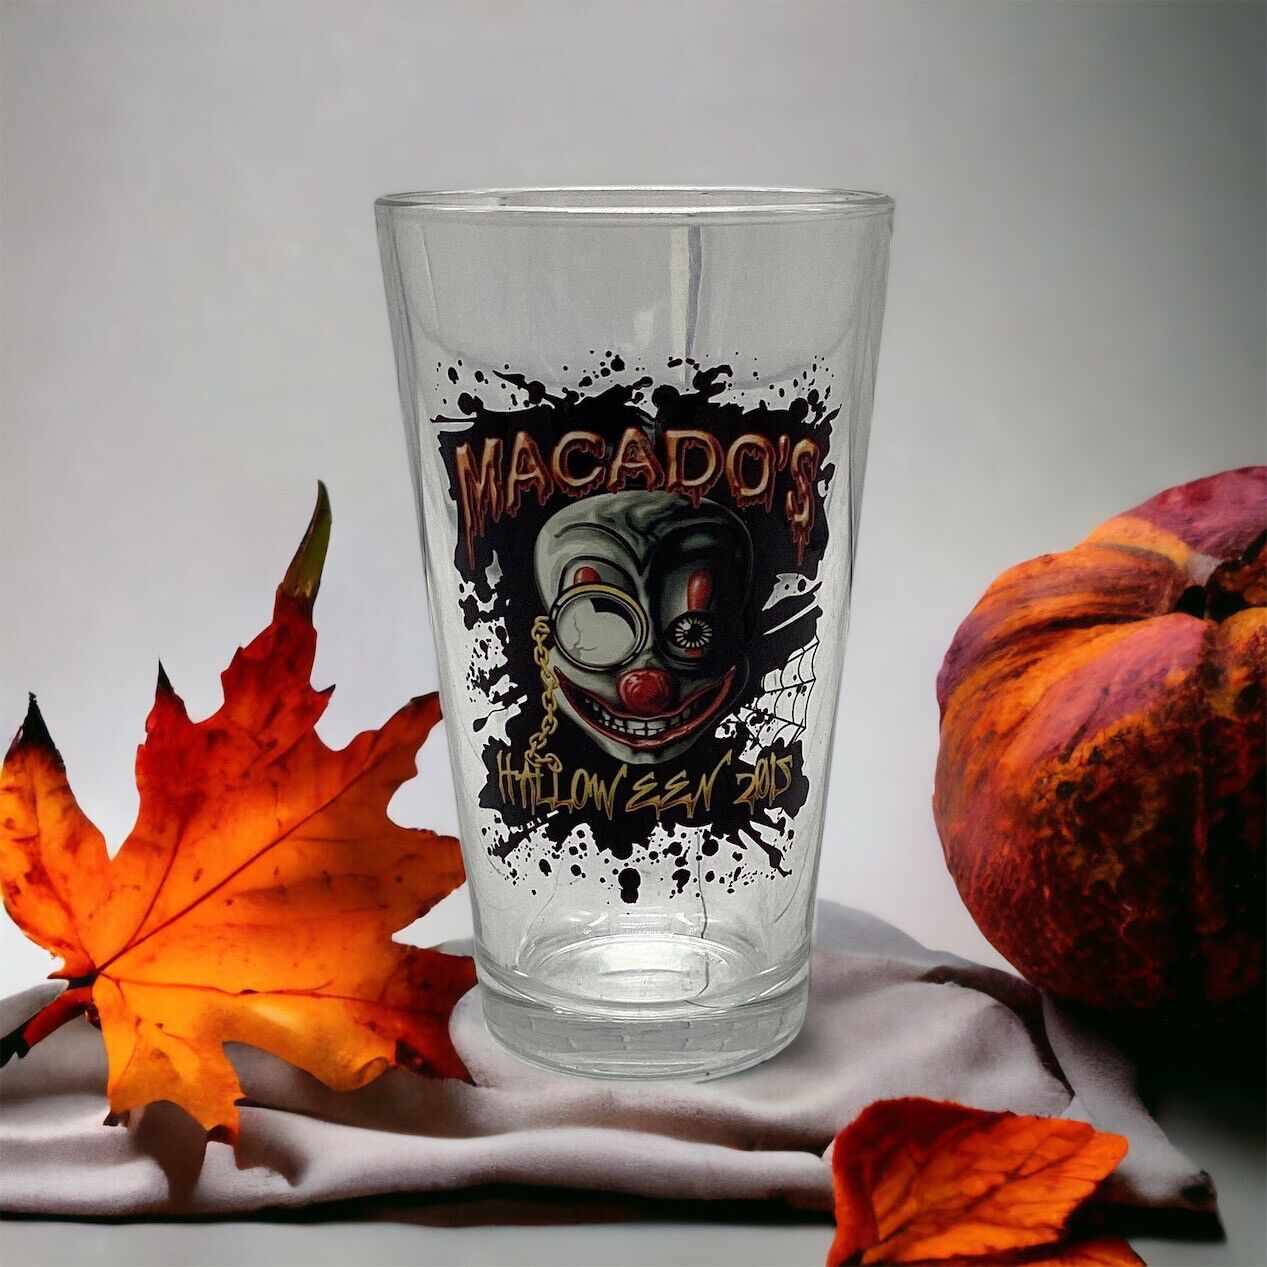 Macado’s Halloween 2015 Scary Clown Drinking Glass Beer Tea Pint Souvenir